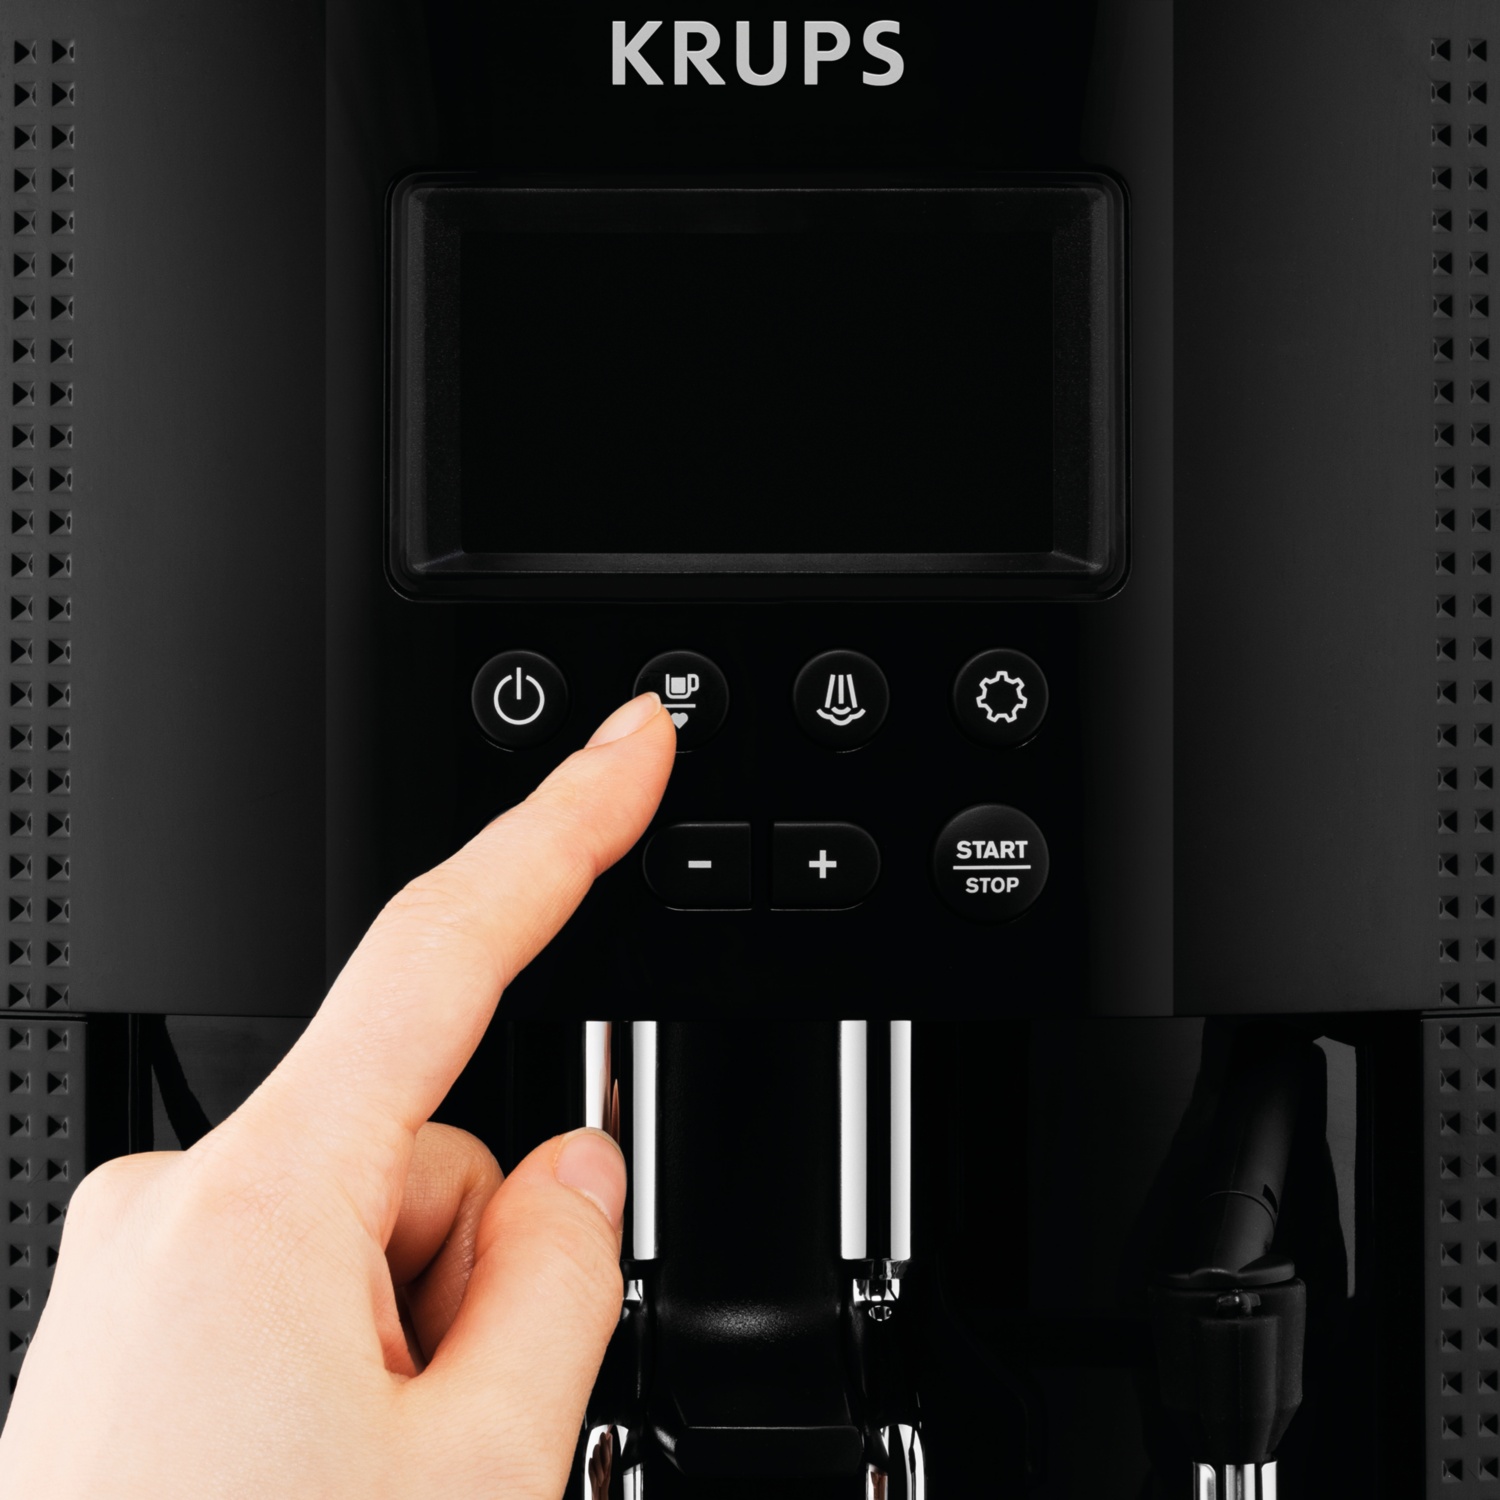 KRUPS Essential Espresso EA8100 Kaffeevollautomat